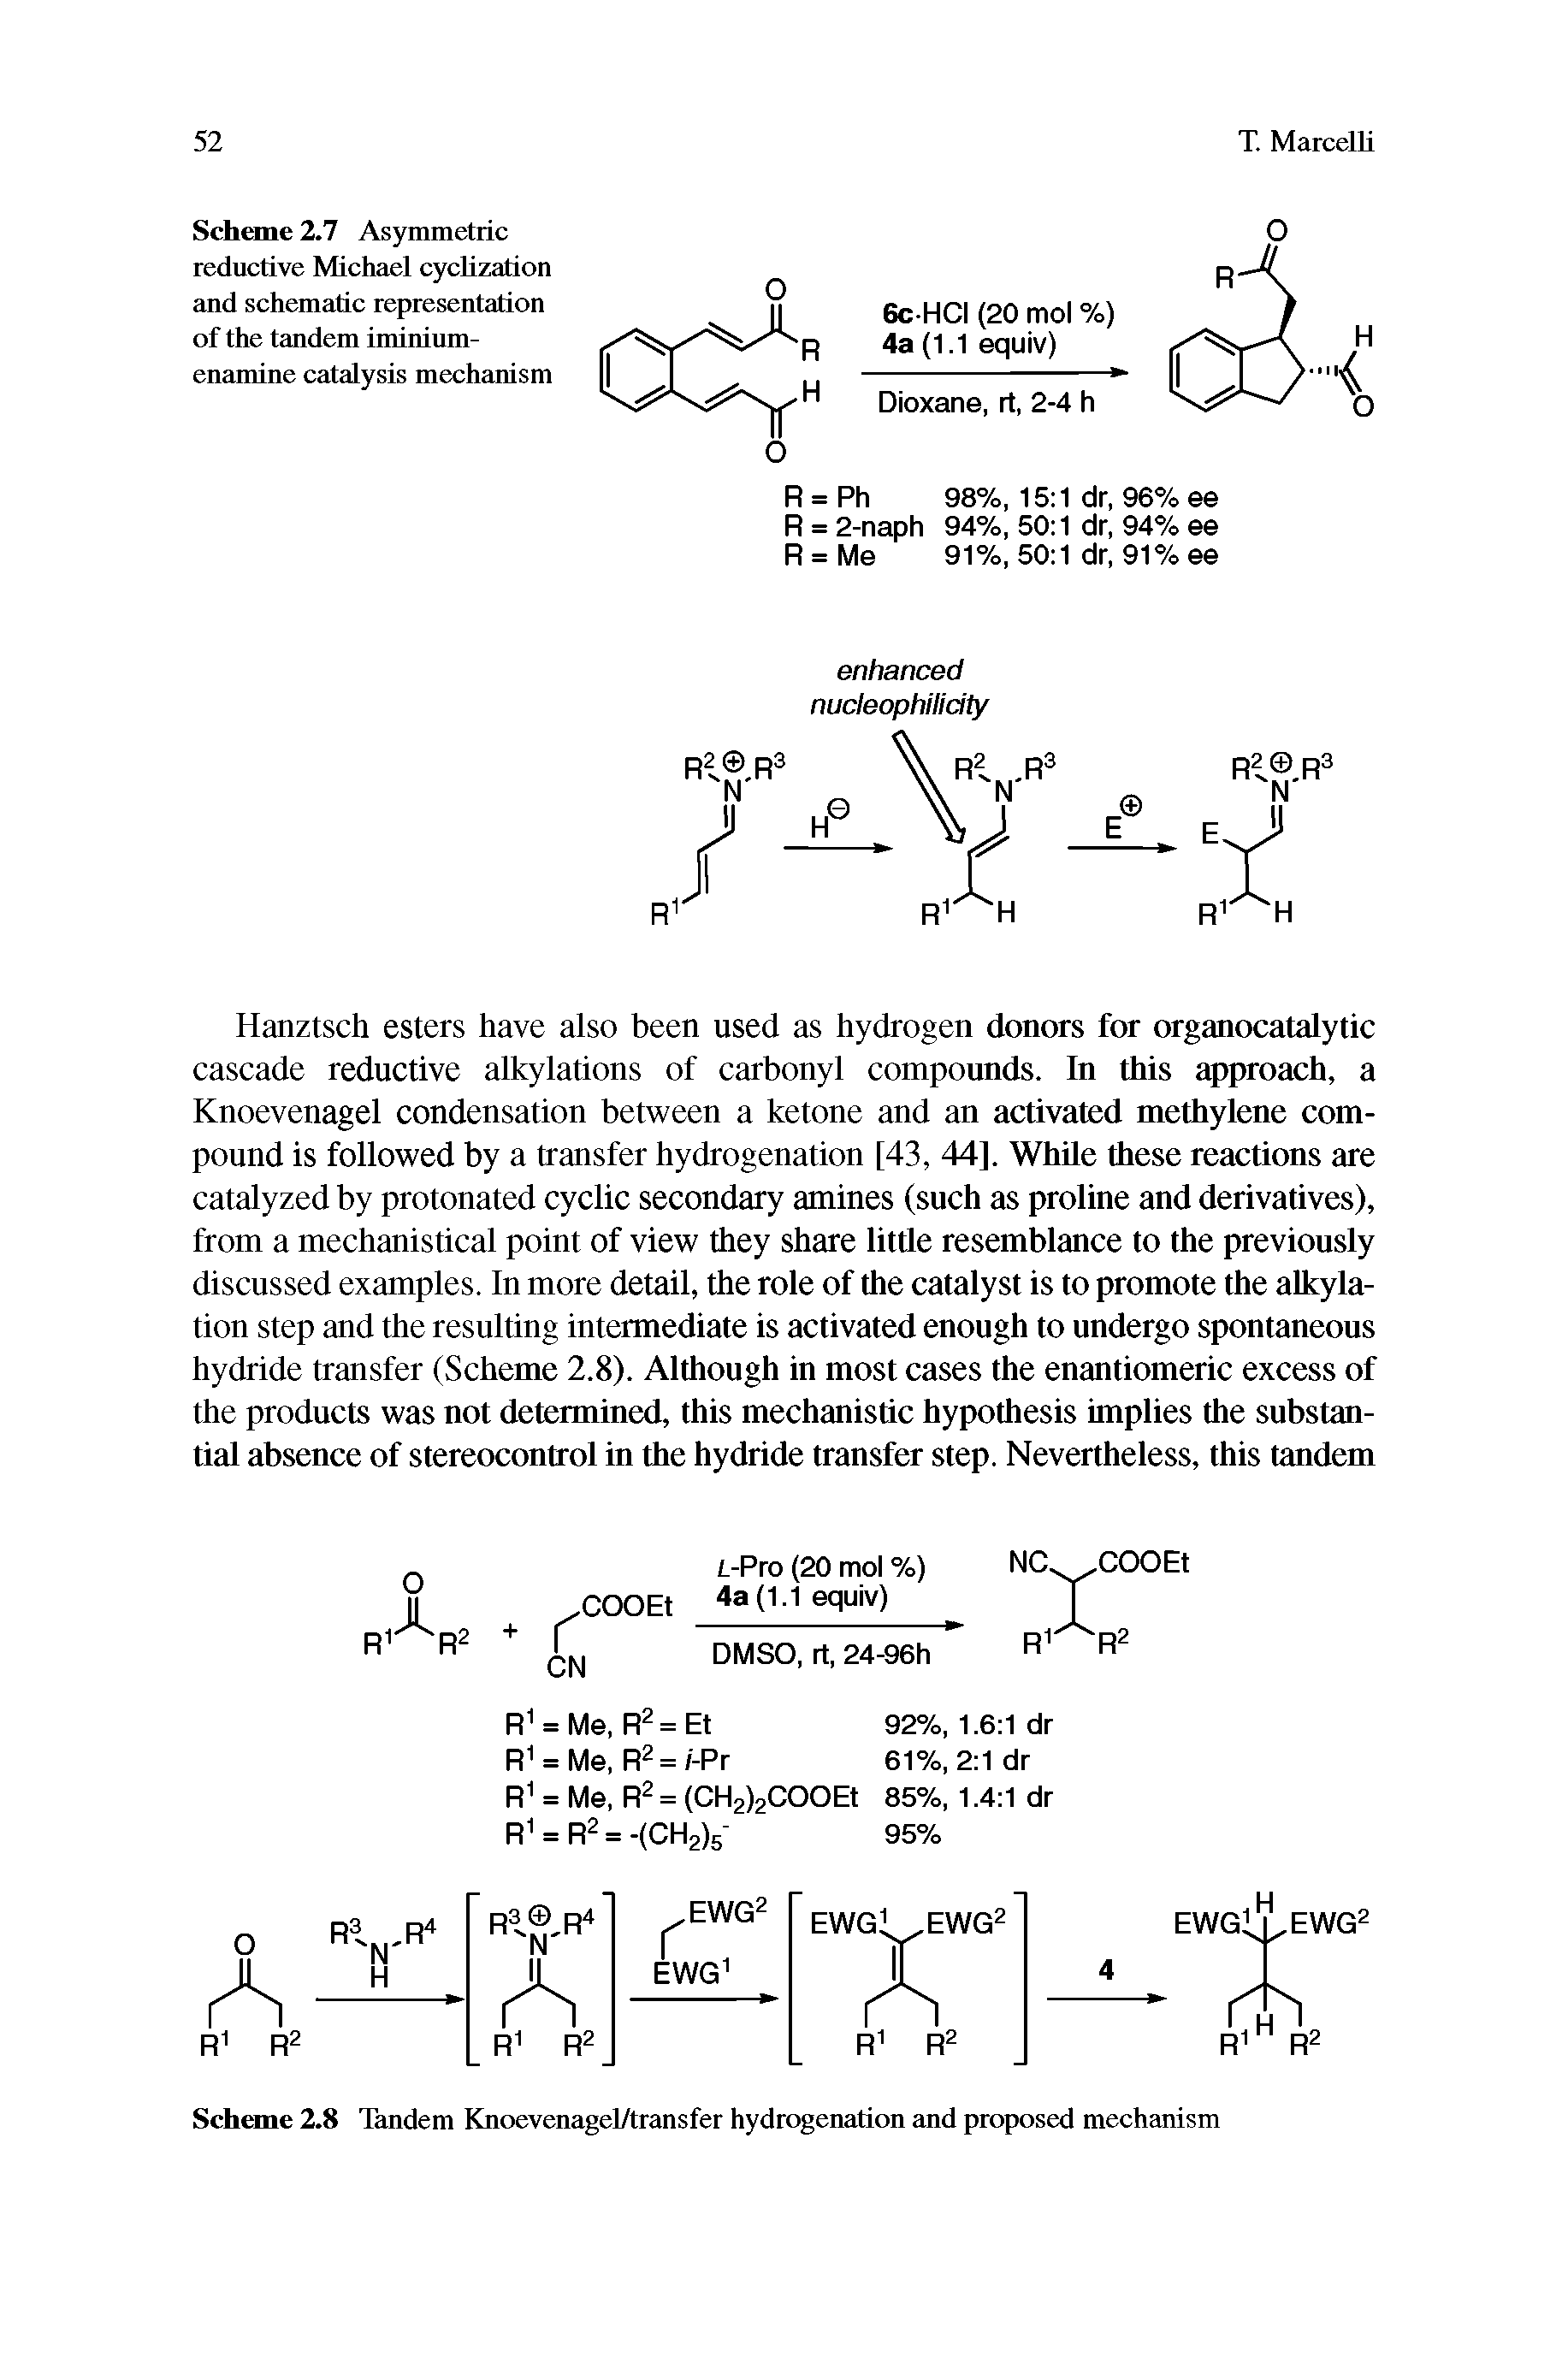 Scheme 2.7 Asymmetric reductive Michael cyclization and schematic representation of the tandem iminium-enamine catalysis mechanism...